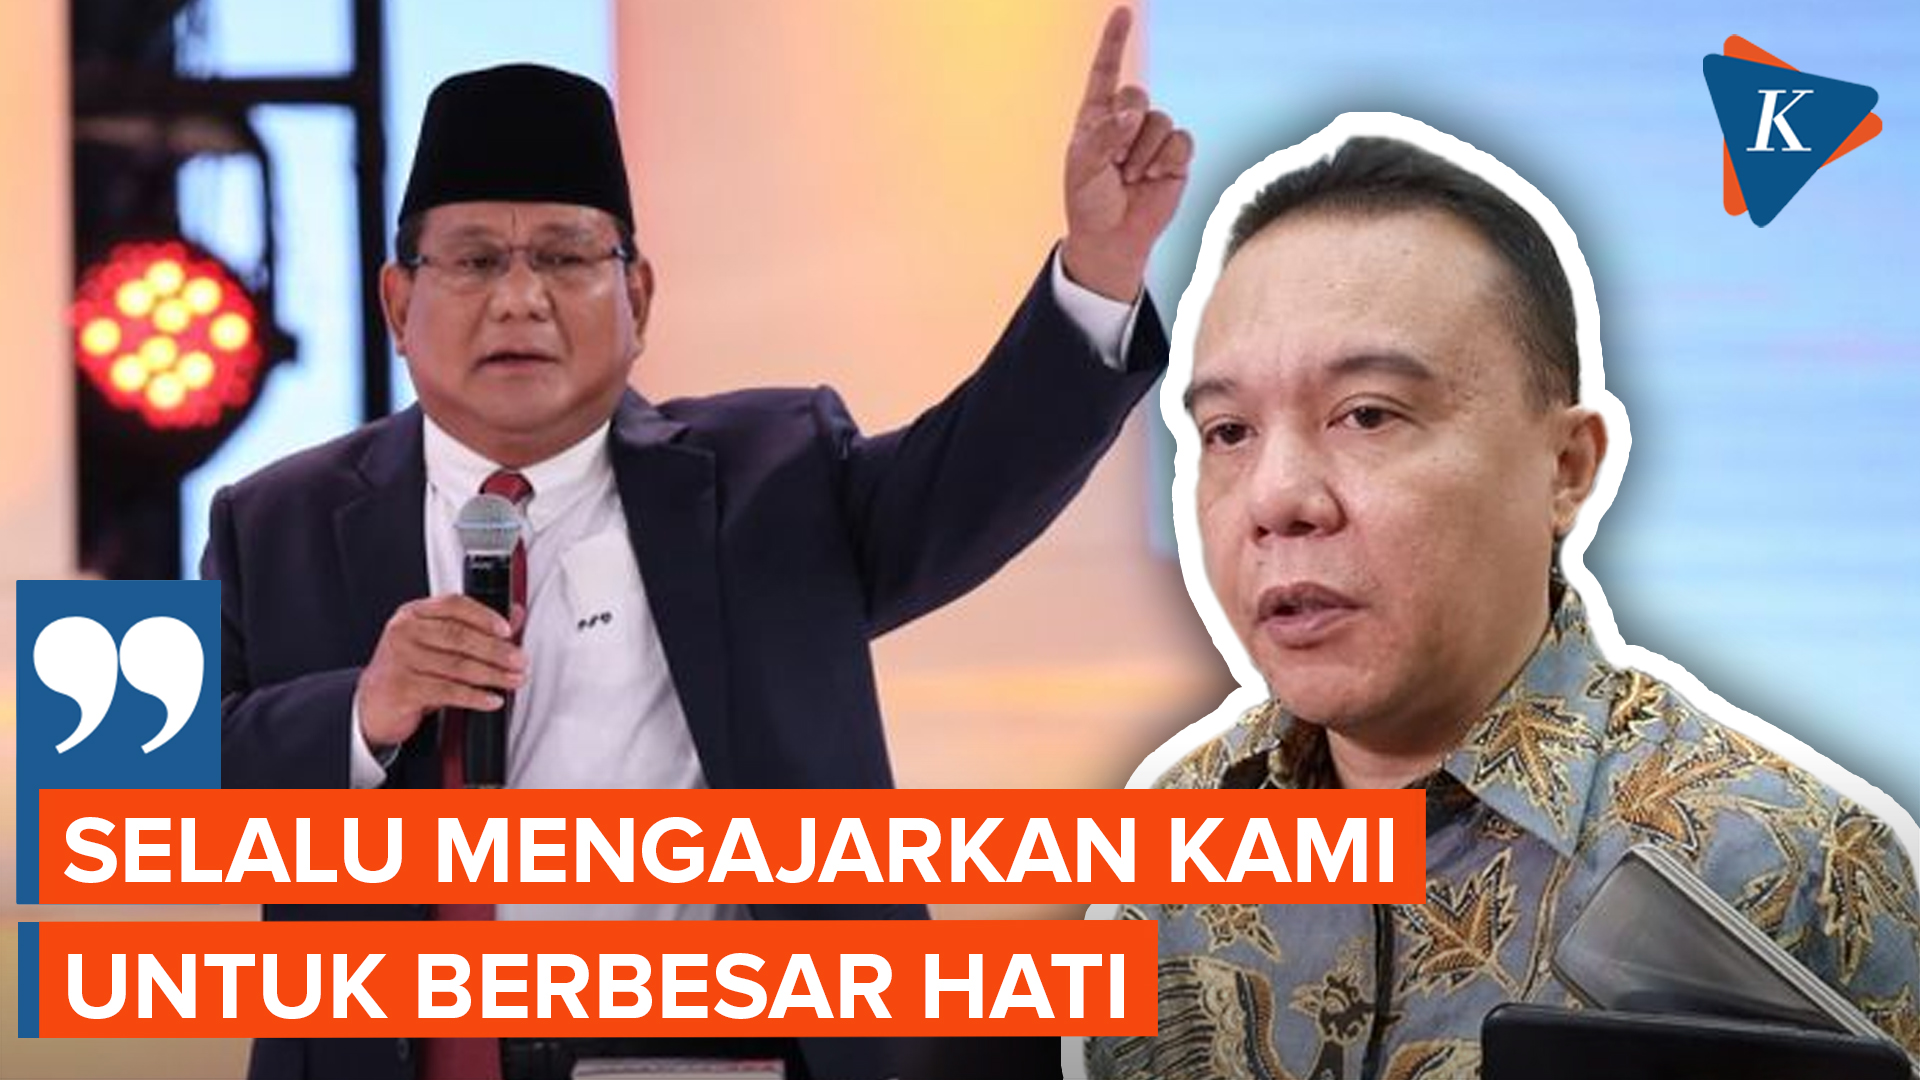 Penjelasan Gerindra soal Prabowo yang Ngaku Sering Dikhianati dan Dibohongi